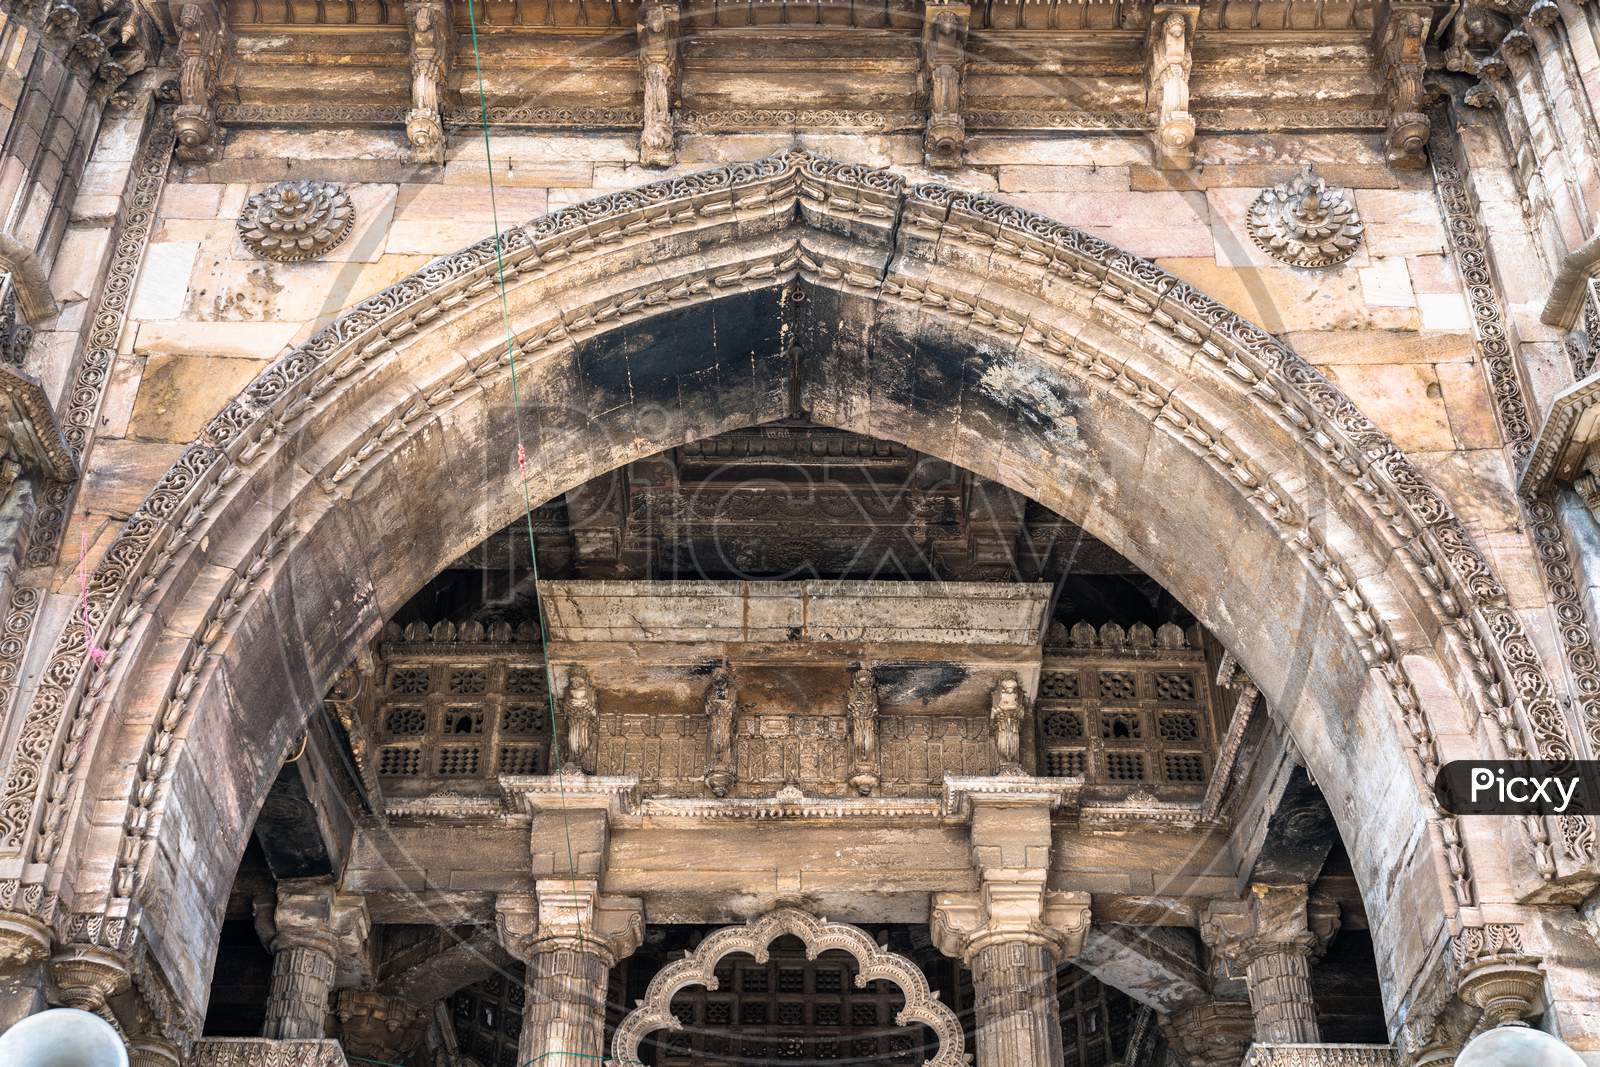 Jama Mosque, The Most Splendid Mosque Of Ahmedabad - Gujarat, India